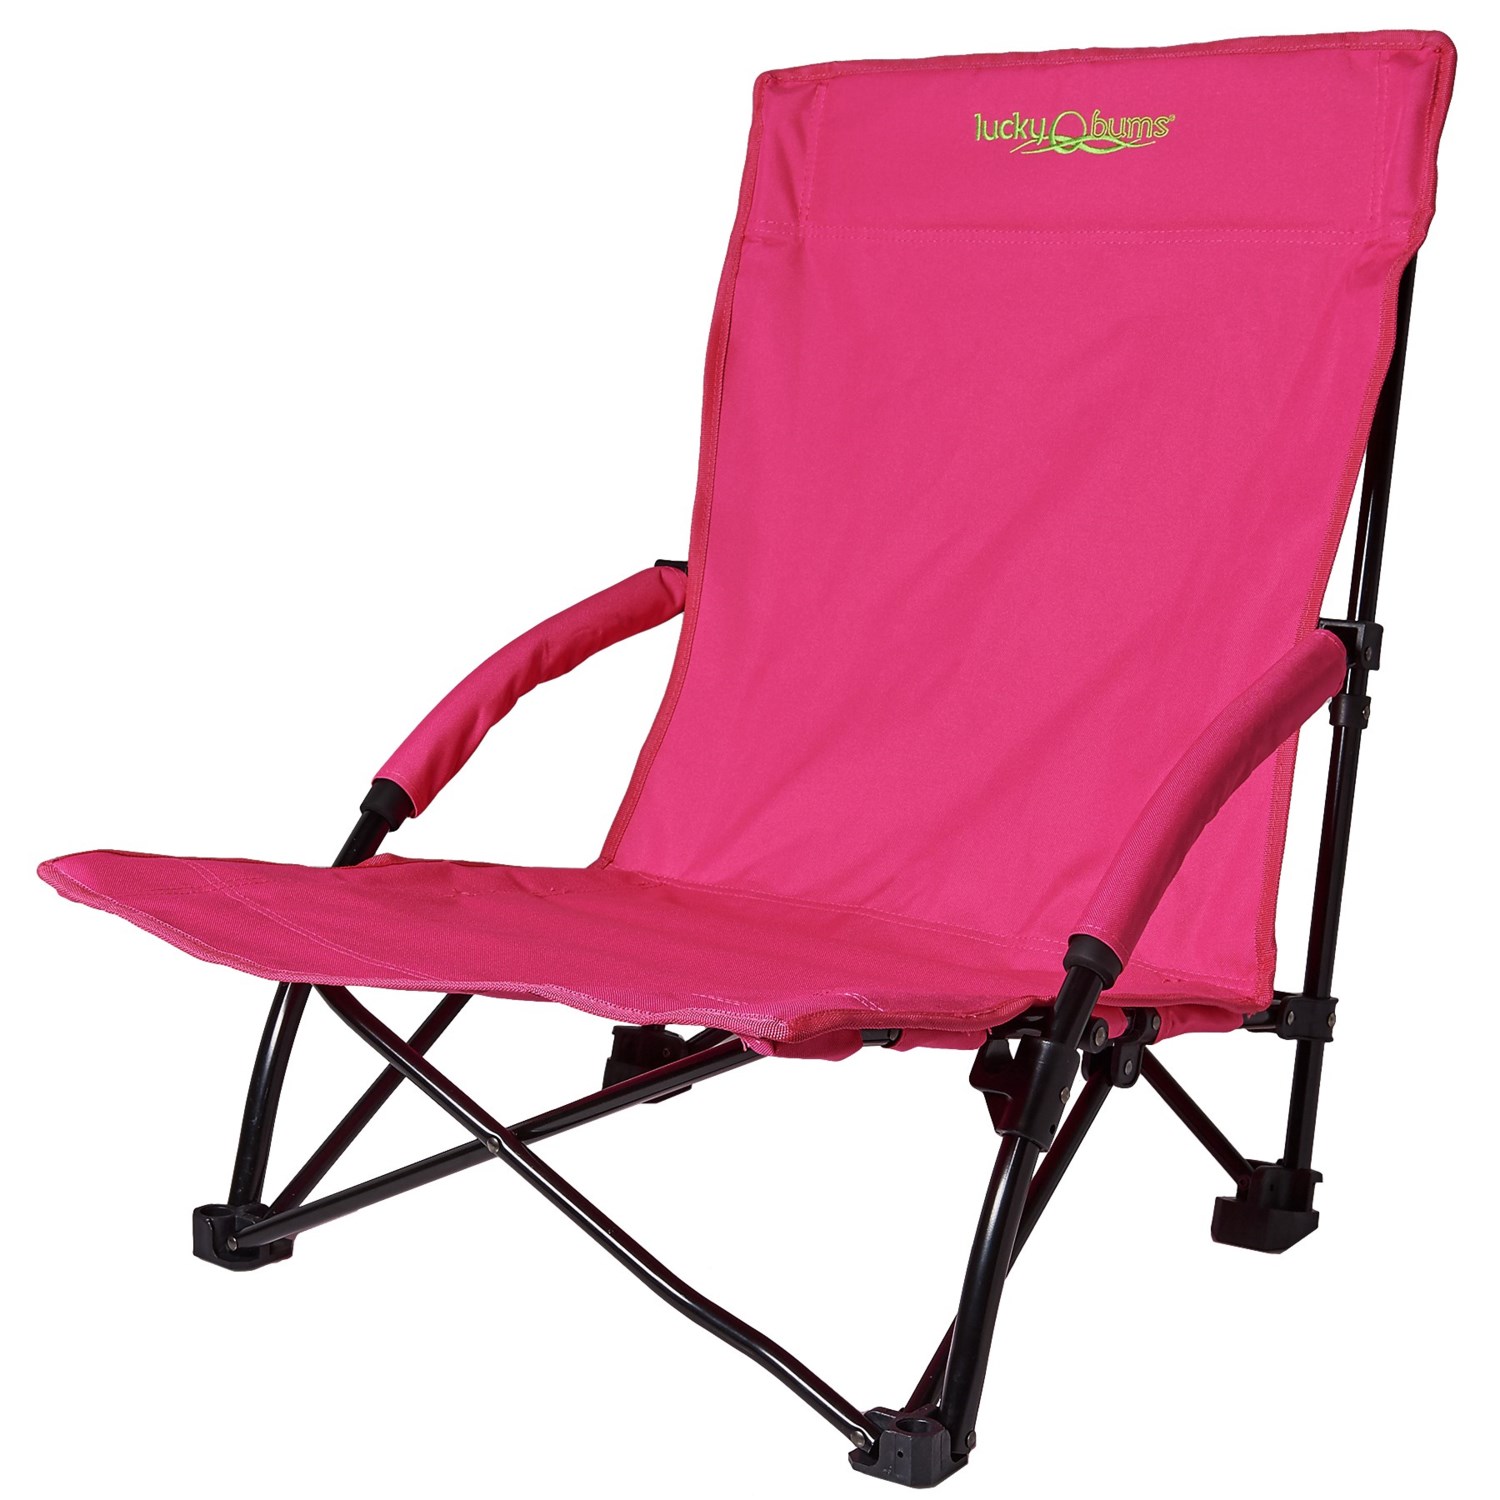 Creatice Sling Folding Beach Chair with Simple Decor